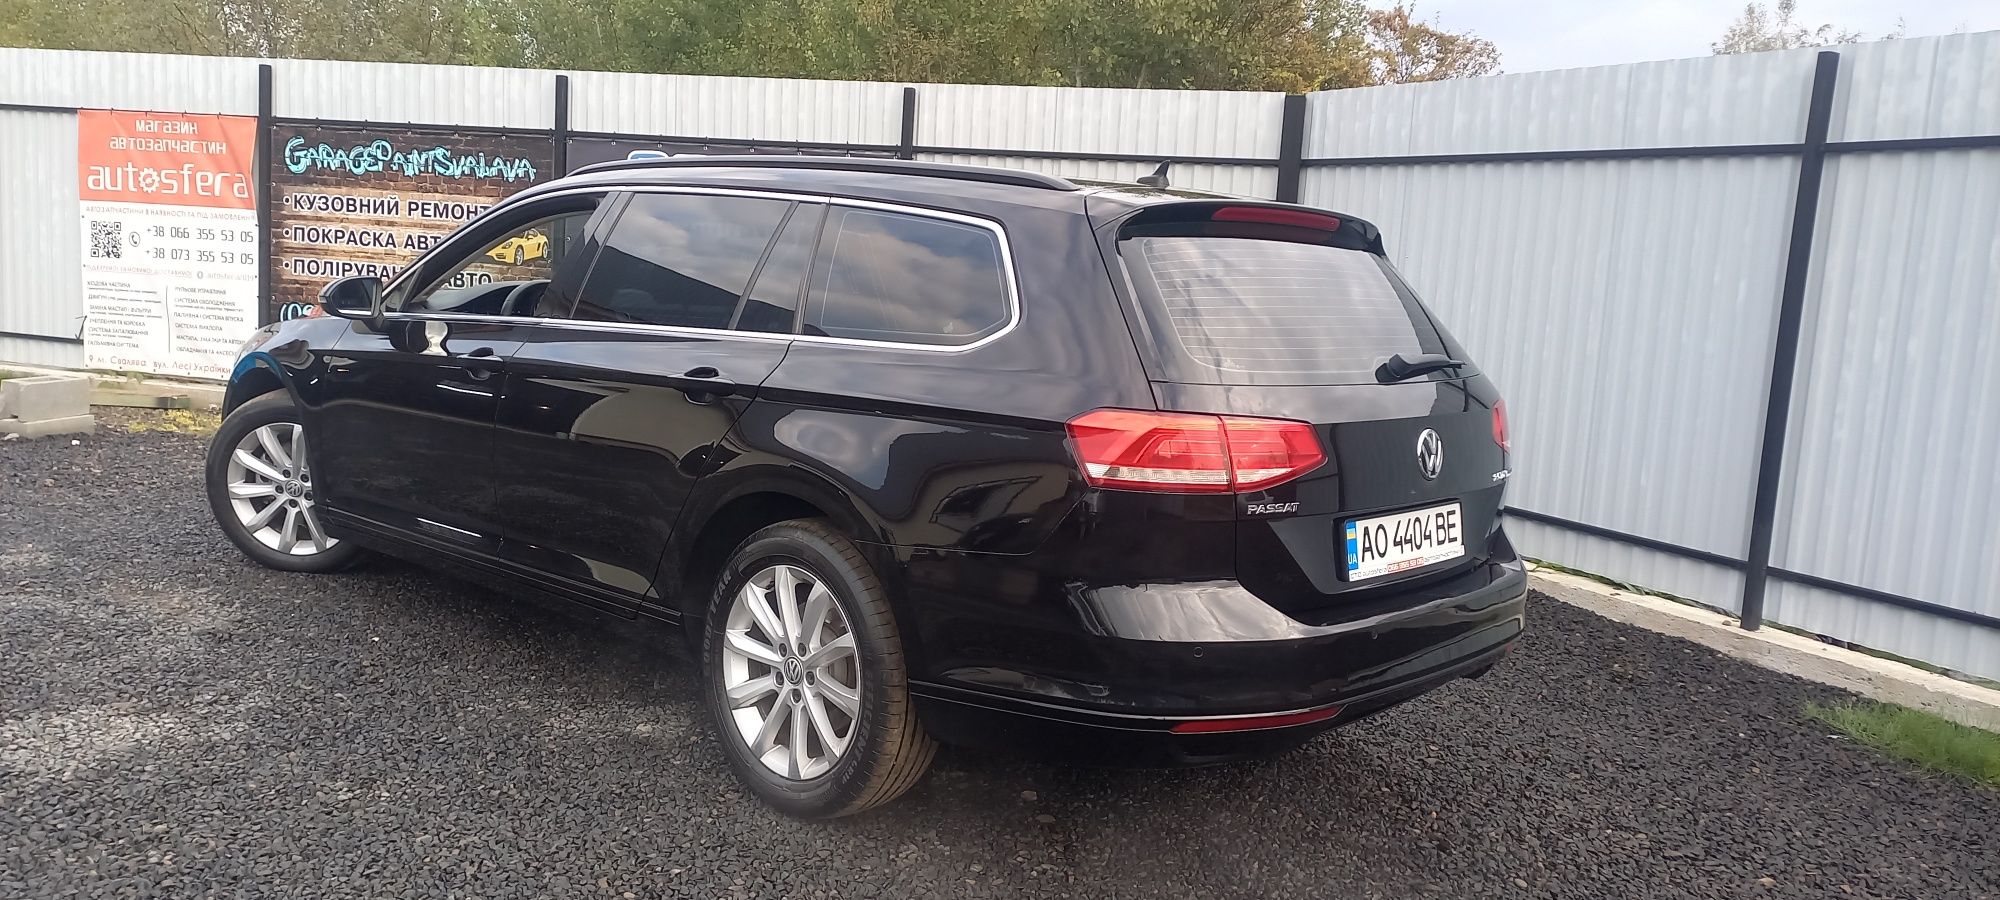 VW Passat B8 2015